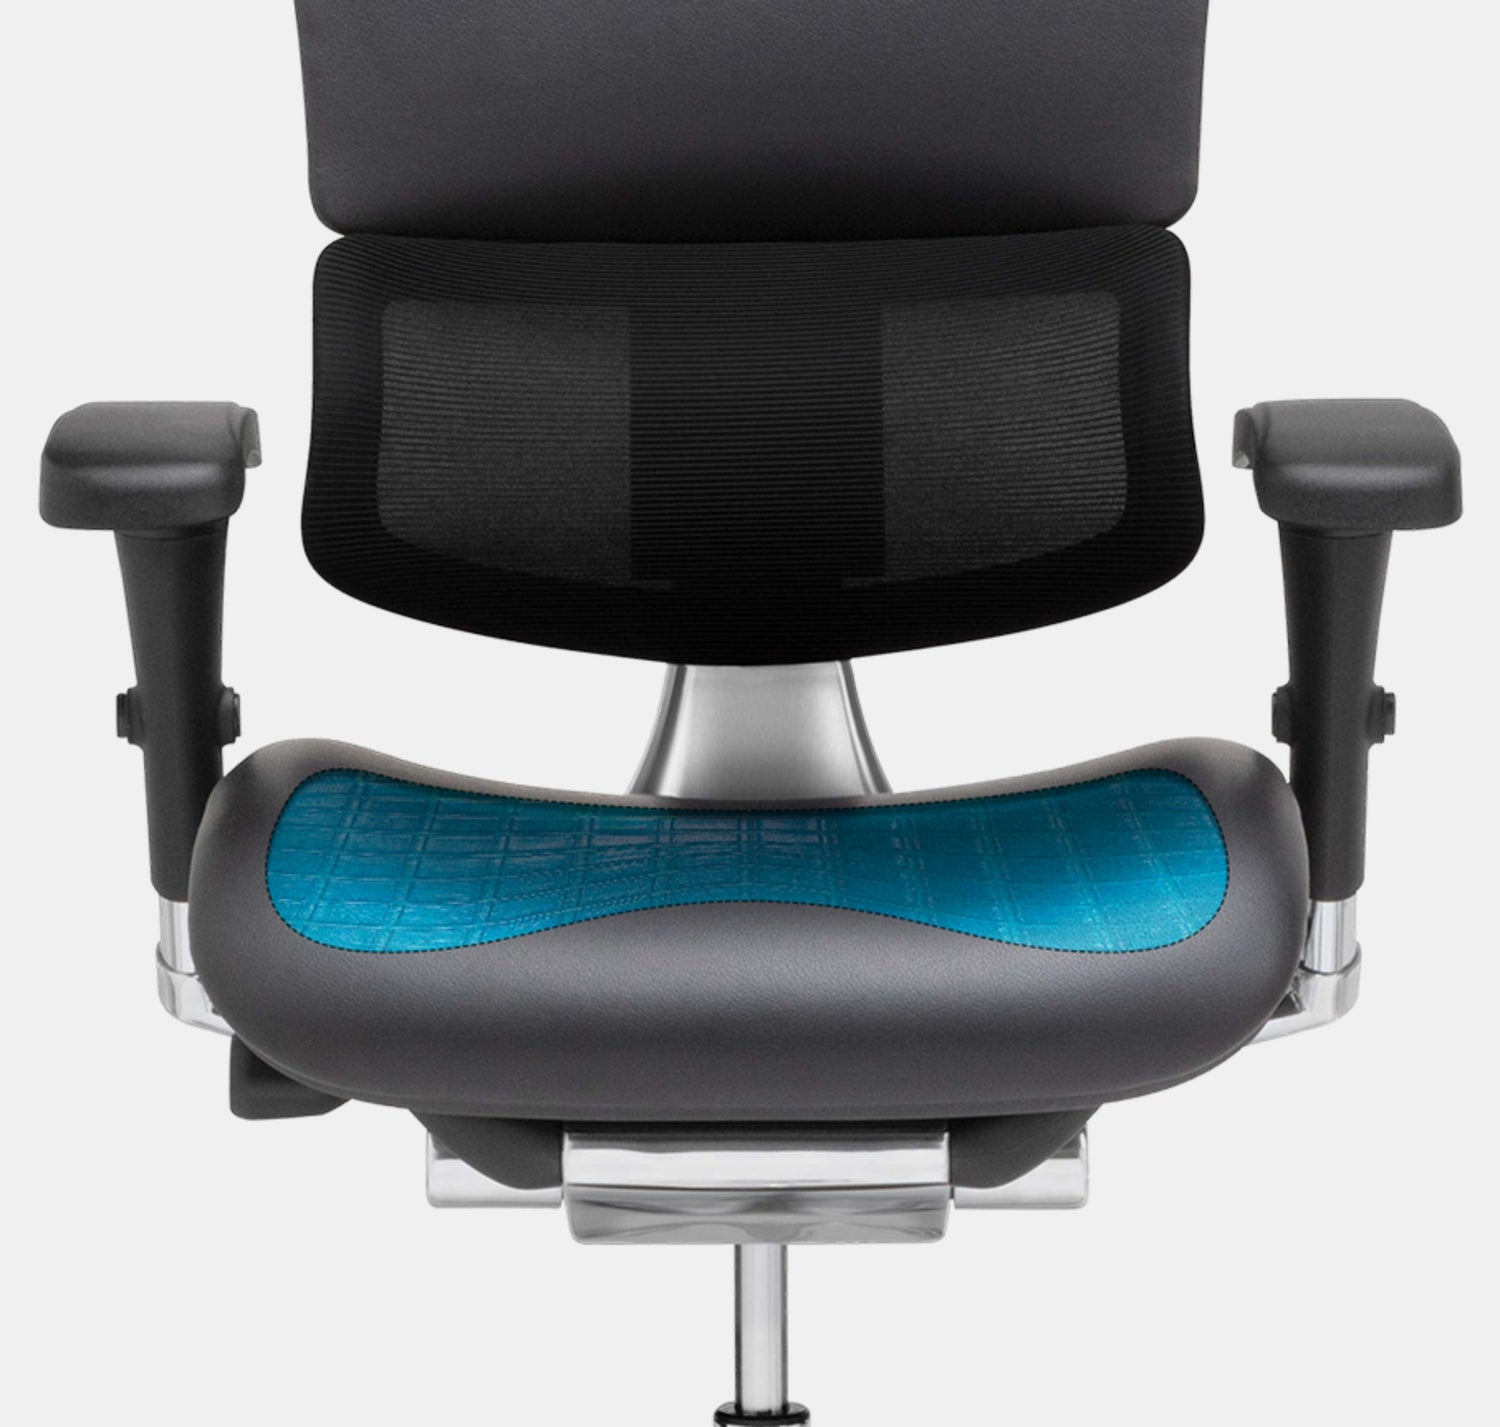 Cooling Gel Contoured M-Foam® Seat